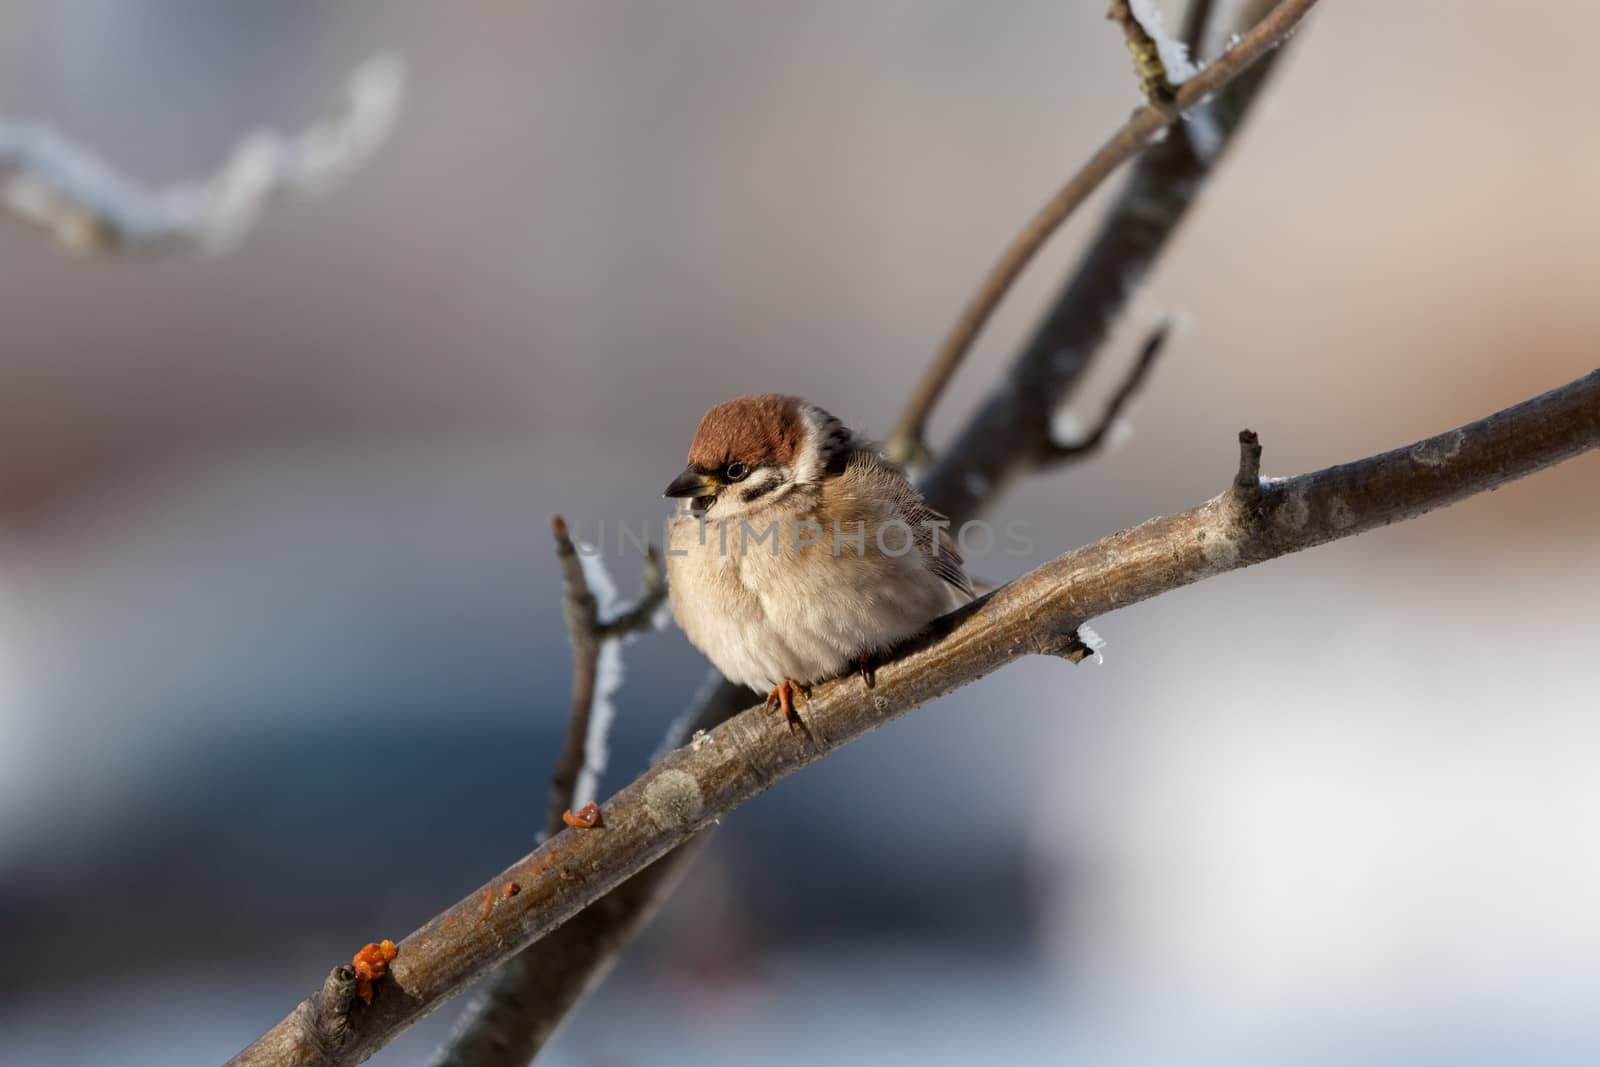 Sparrow in winter day by fotooxotnik